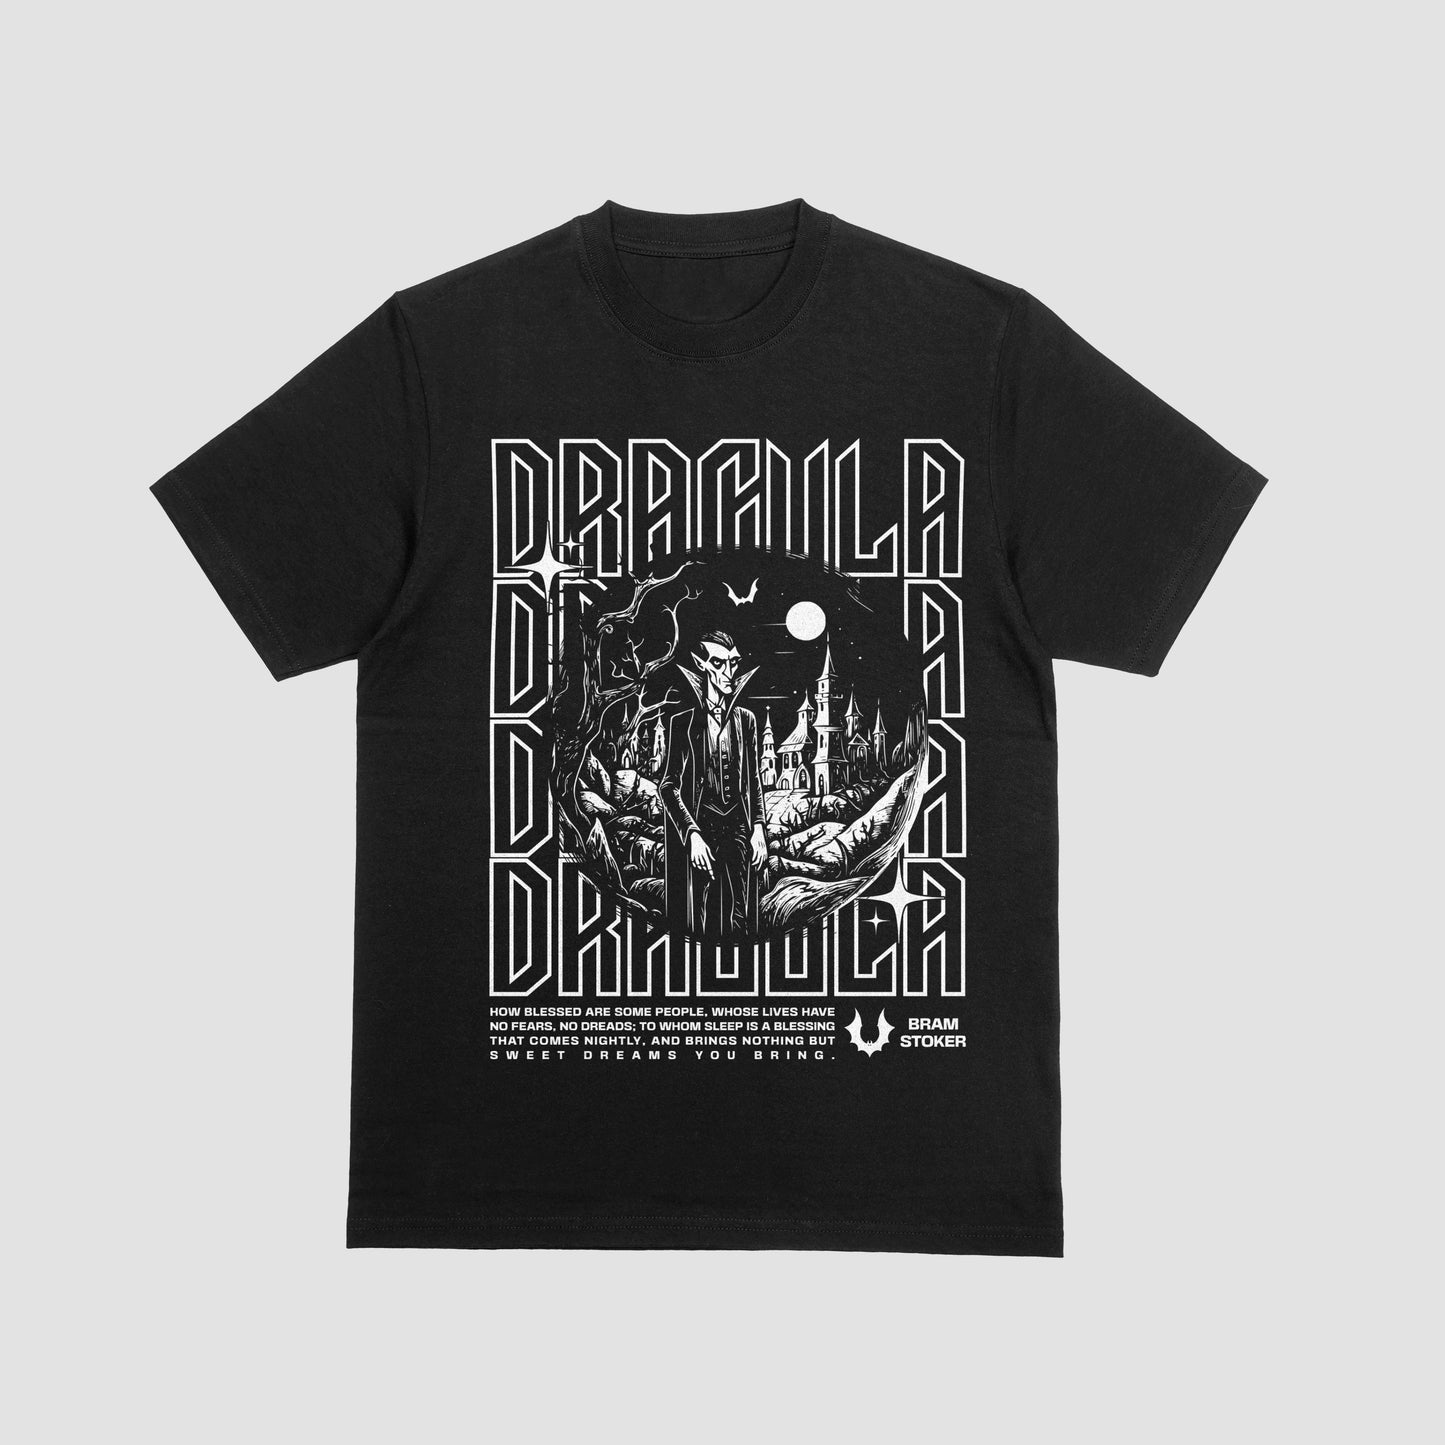 A Dracula by Bram Stoker T-shirt